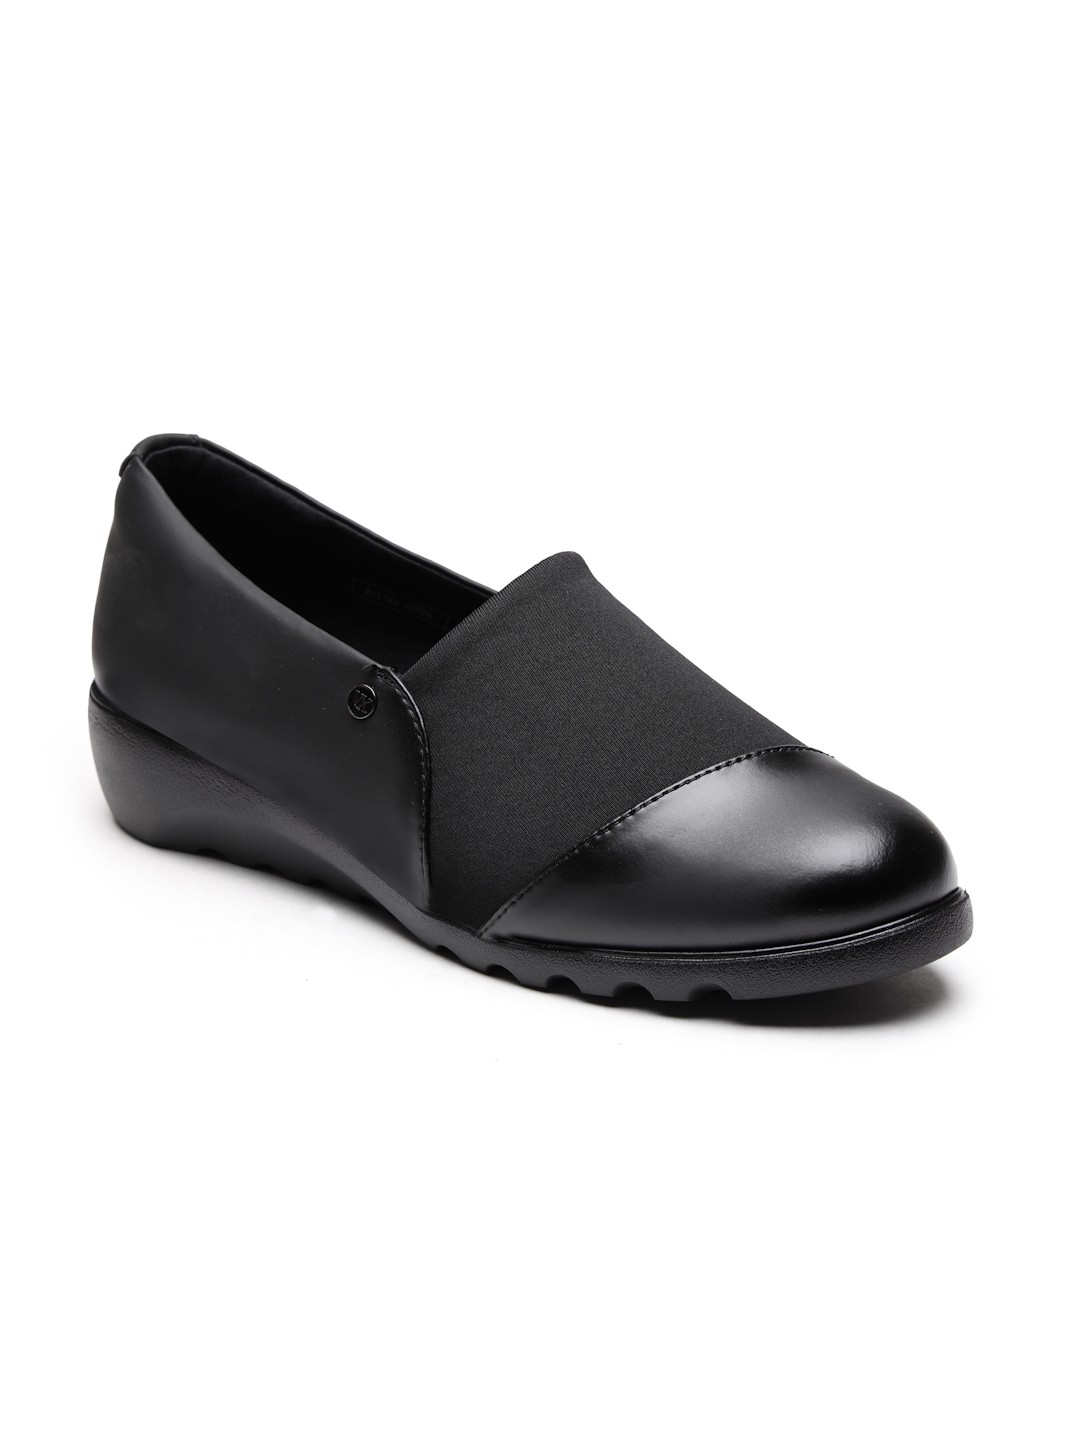 Buy Von Wellx Germany Comfort Women's Black Casual Shoes Ayla Online in Visakhapatnam